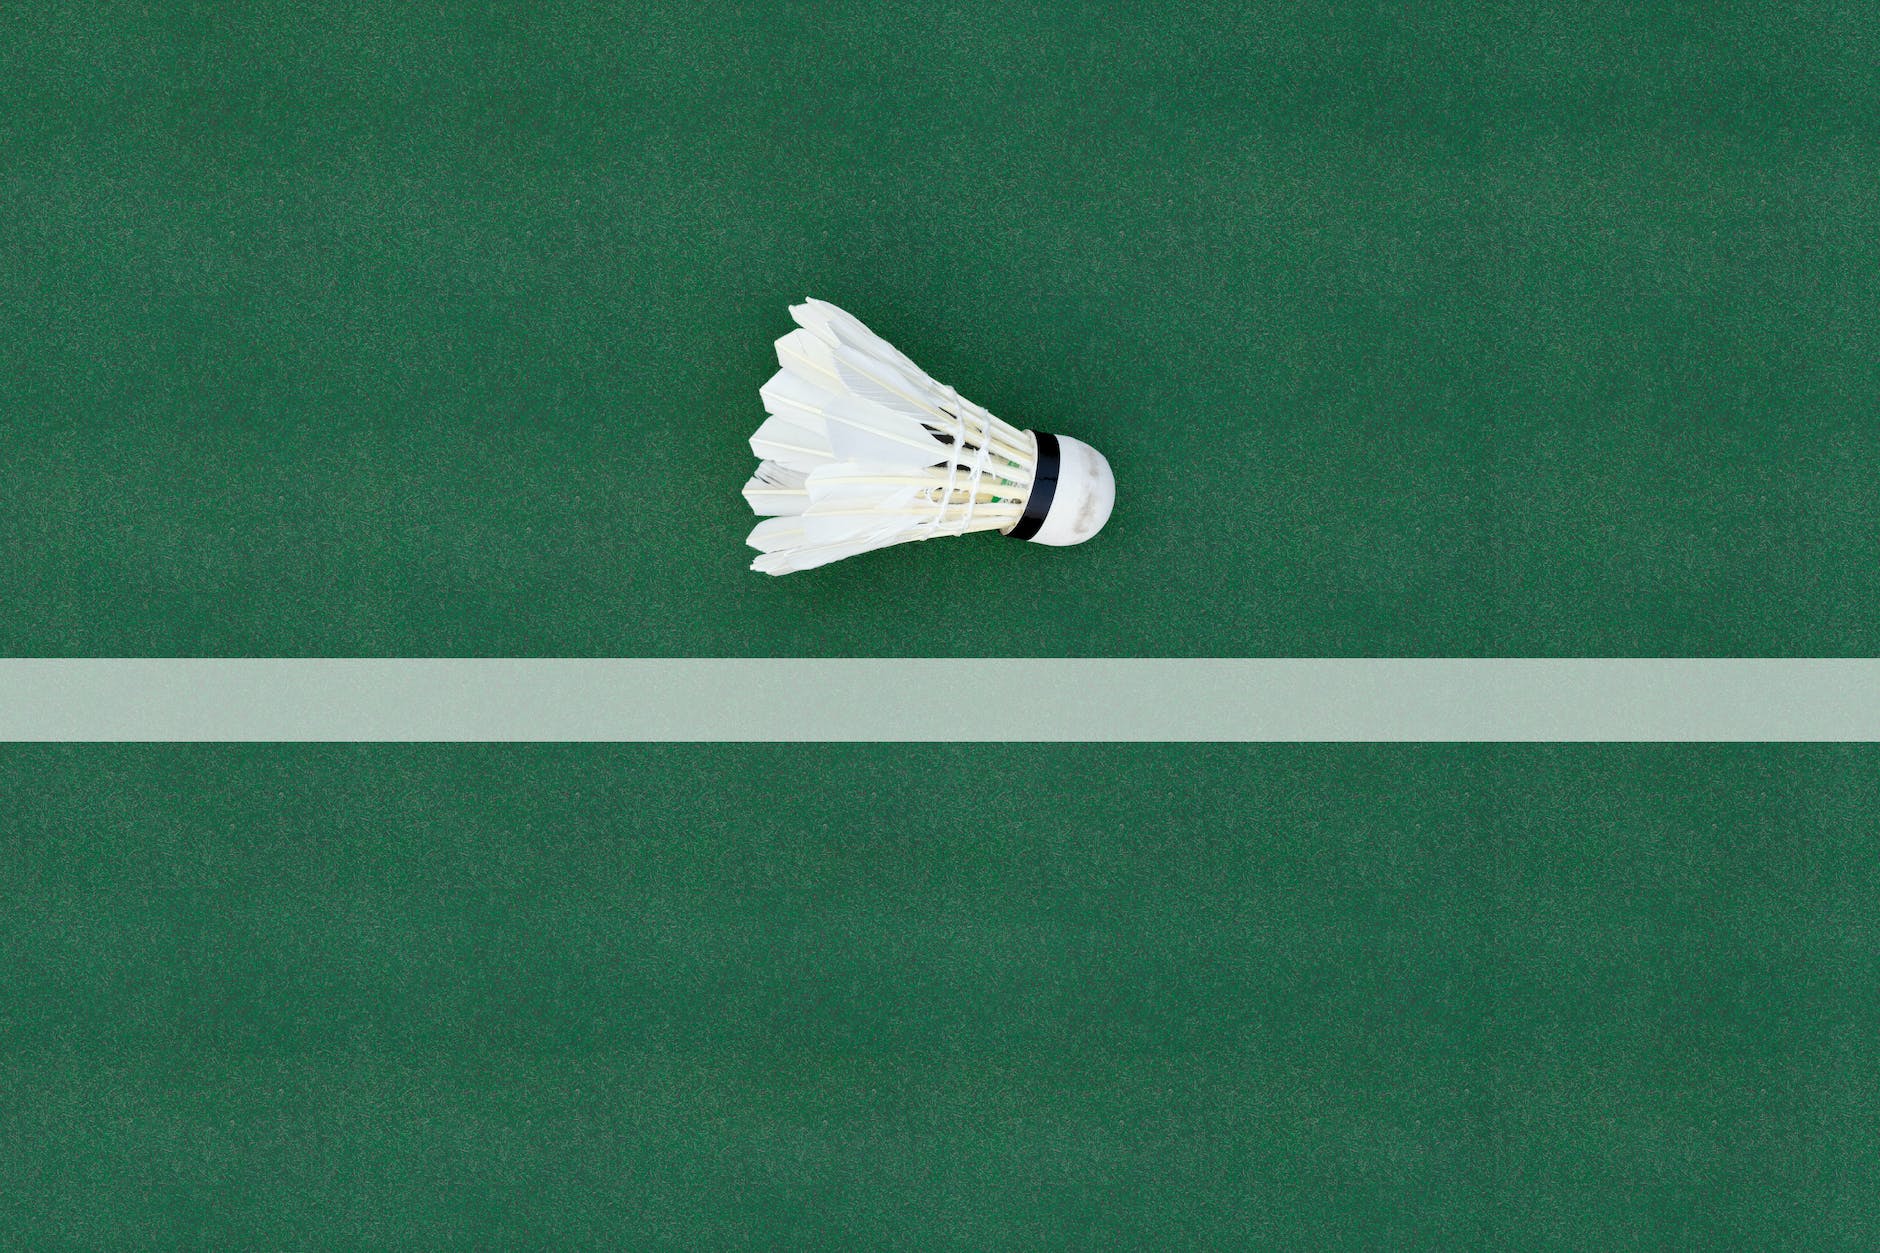 a close up shot of a shuttlecock on a badminton court floor